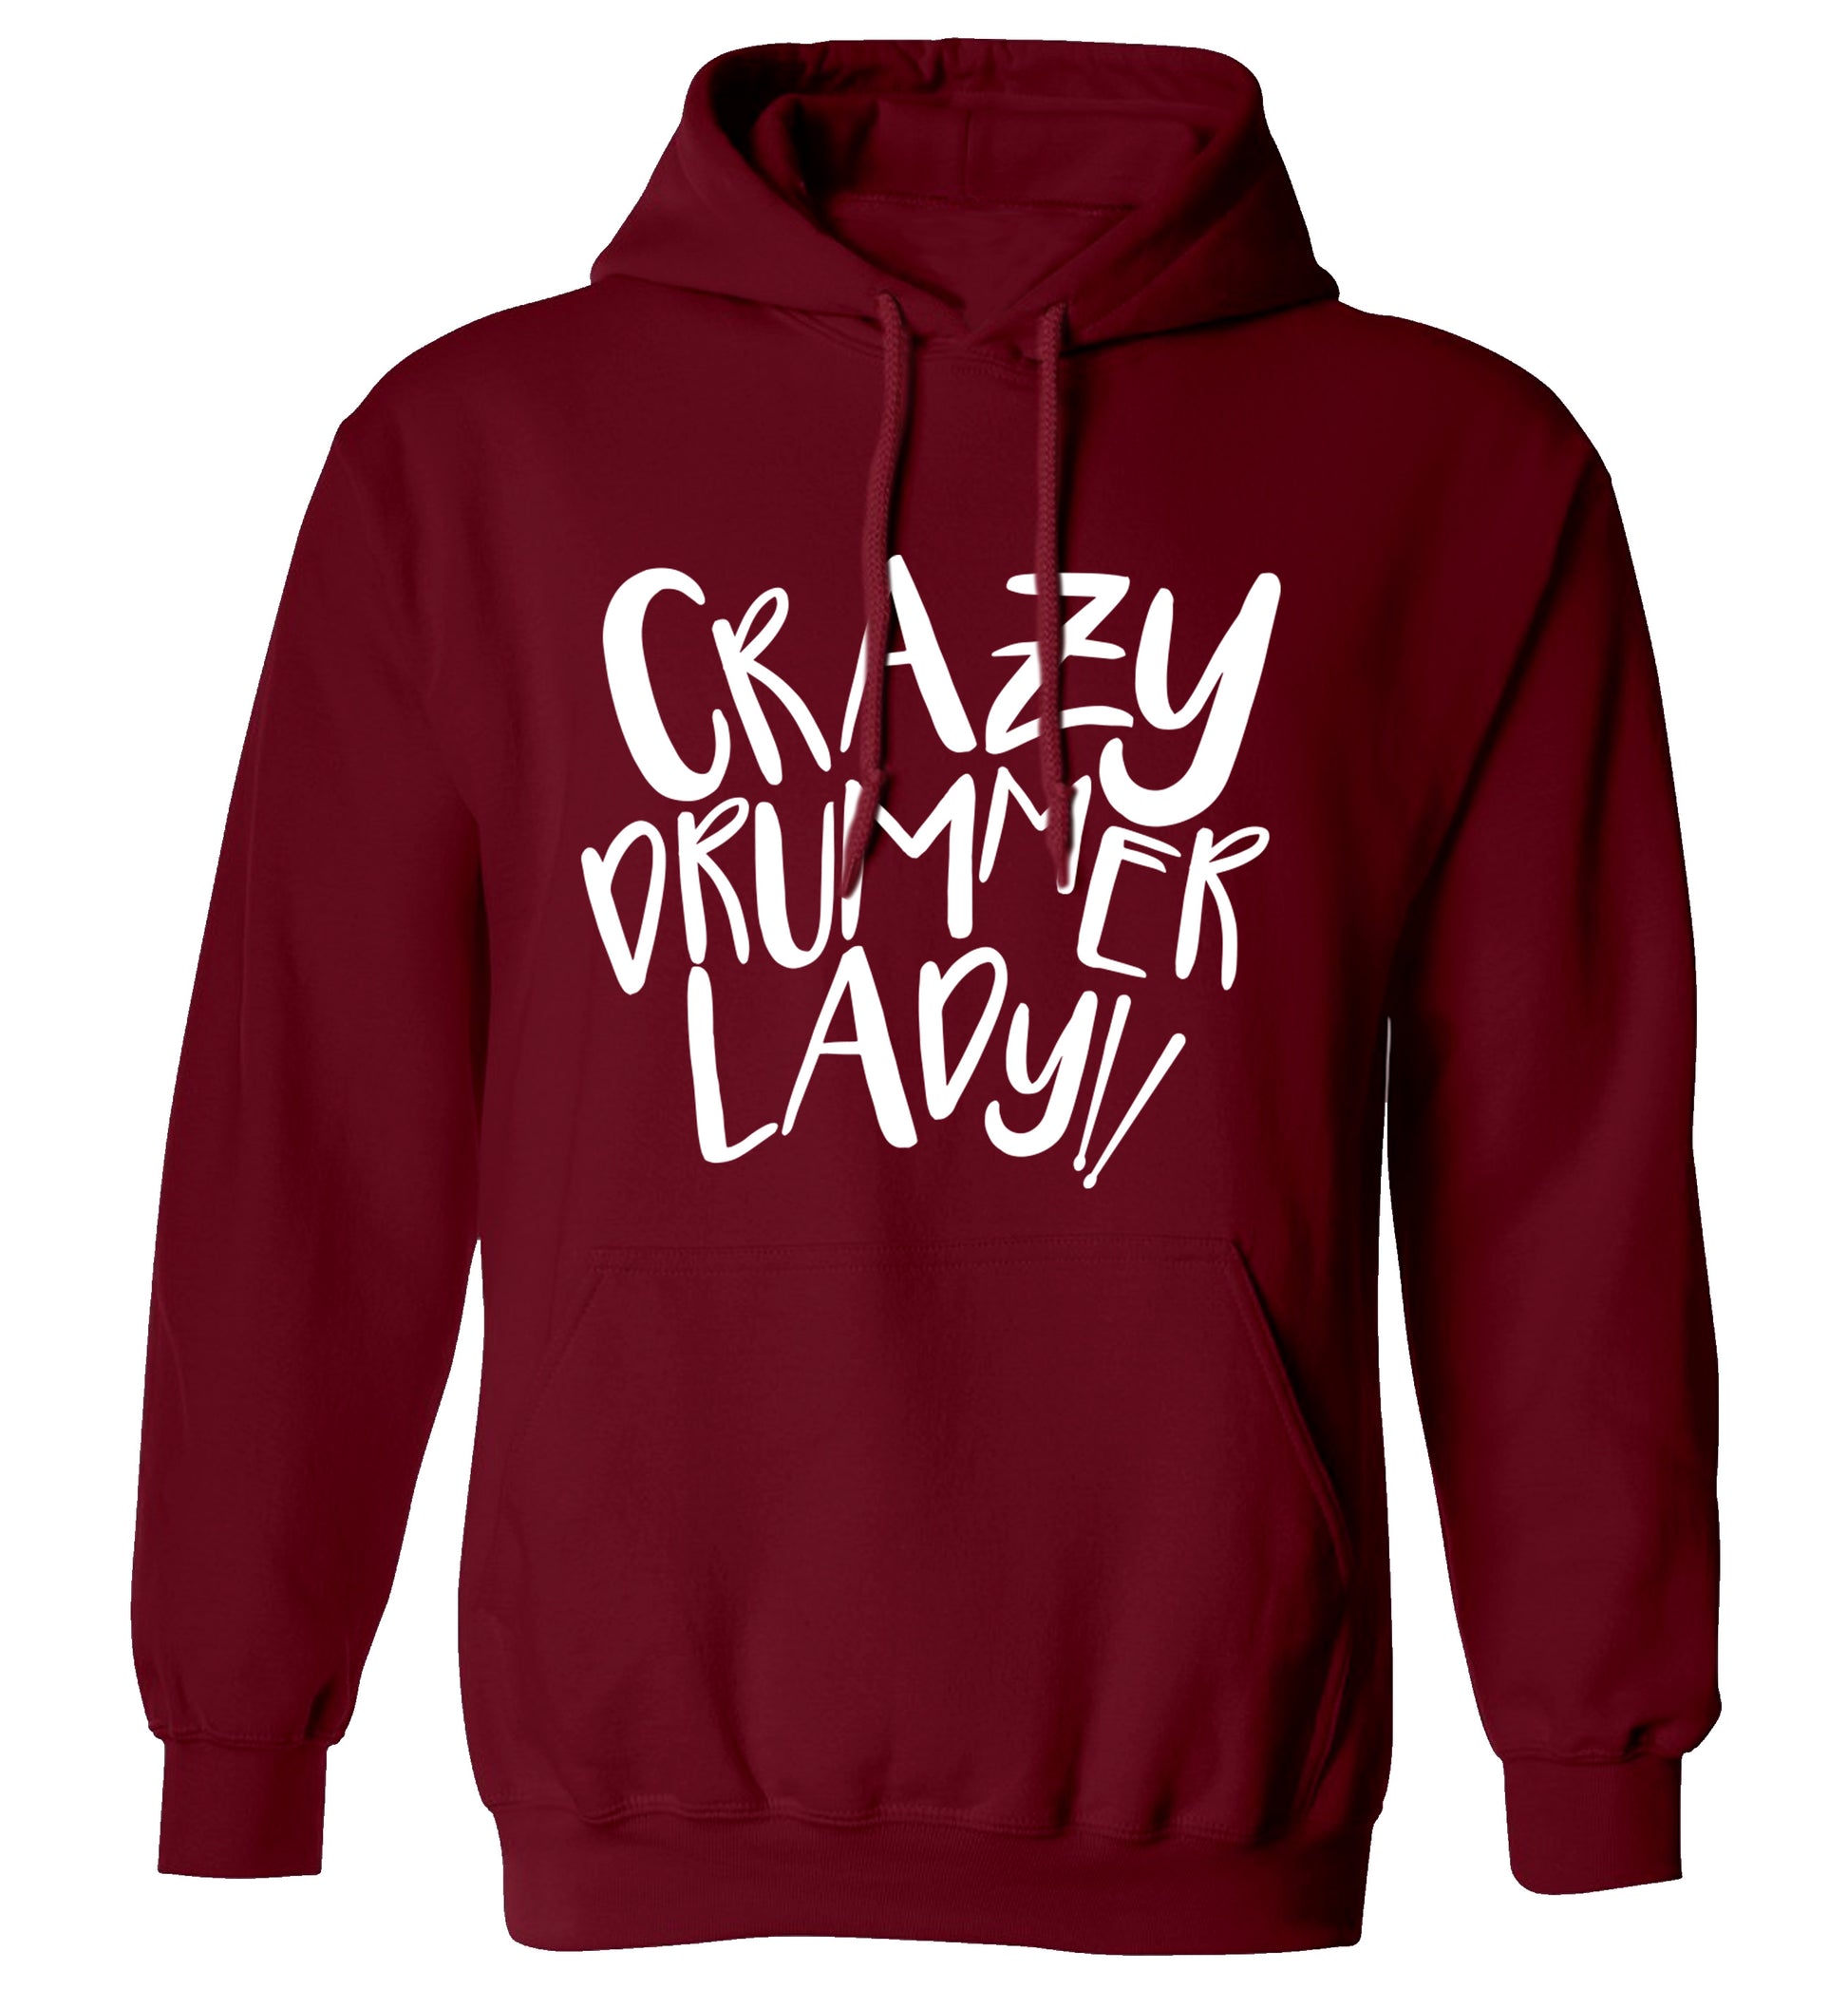 Crazy drummer lady adults unisex maroon hoodie 2XL